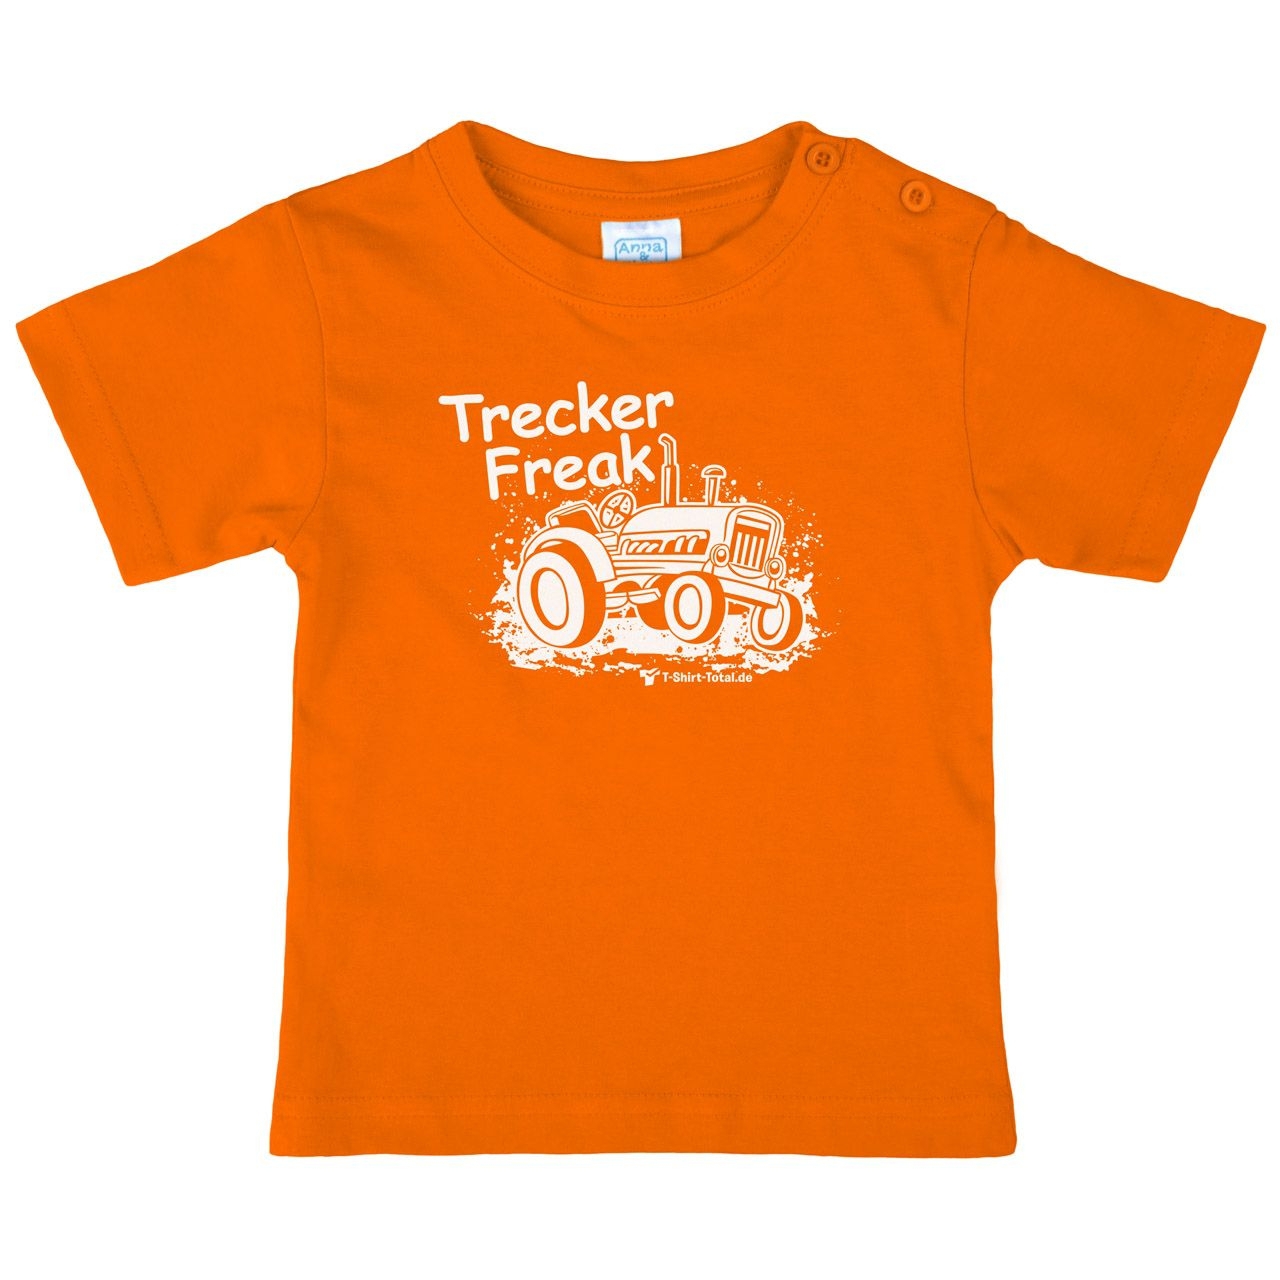 Trecker Freak Kinder T-Shirt orange 92